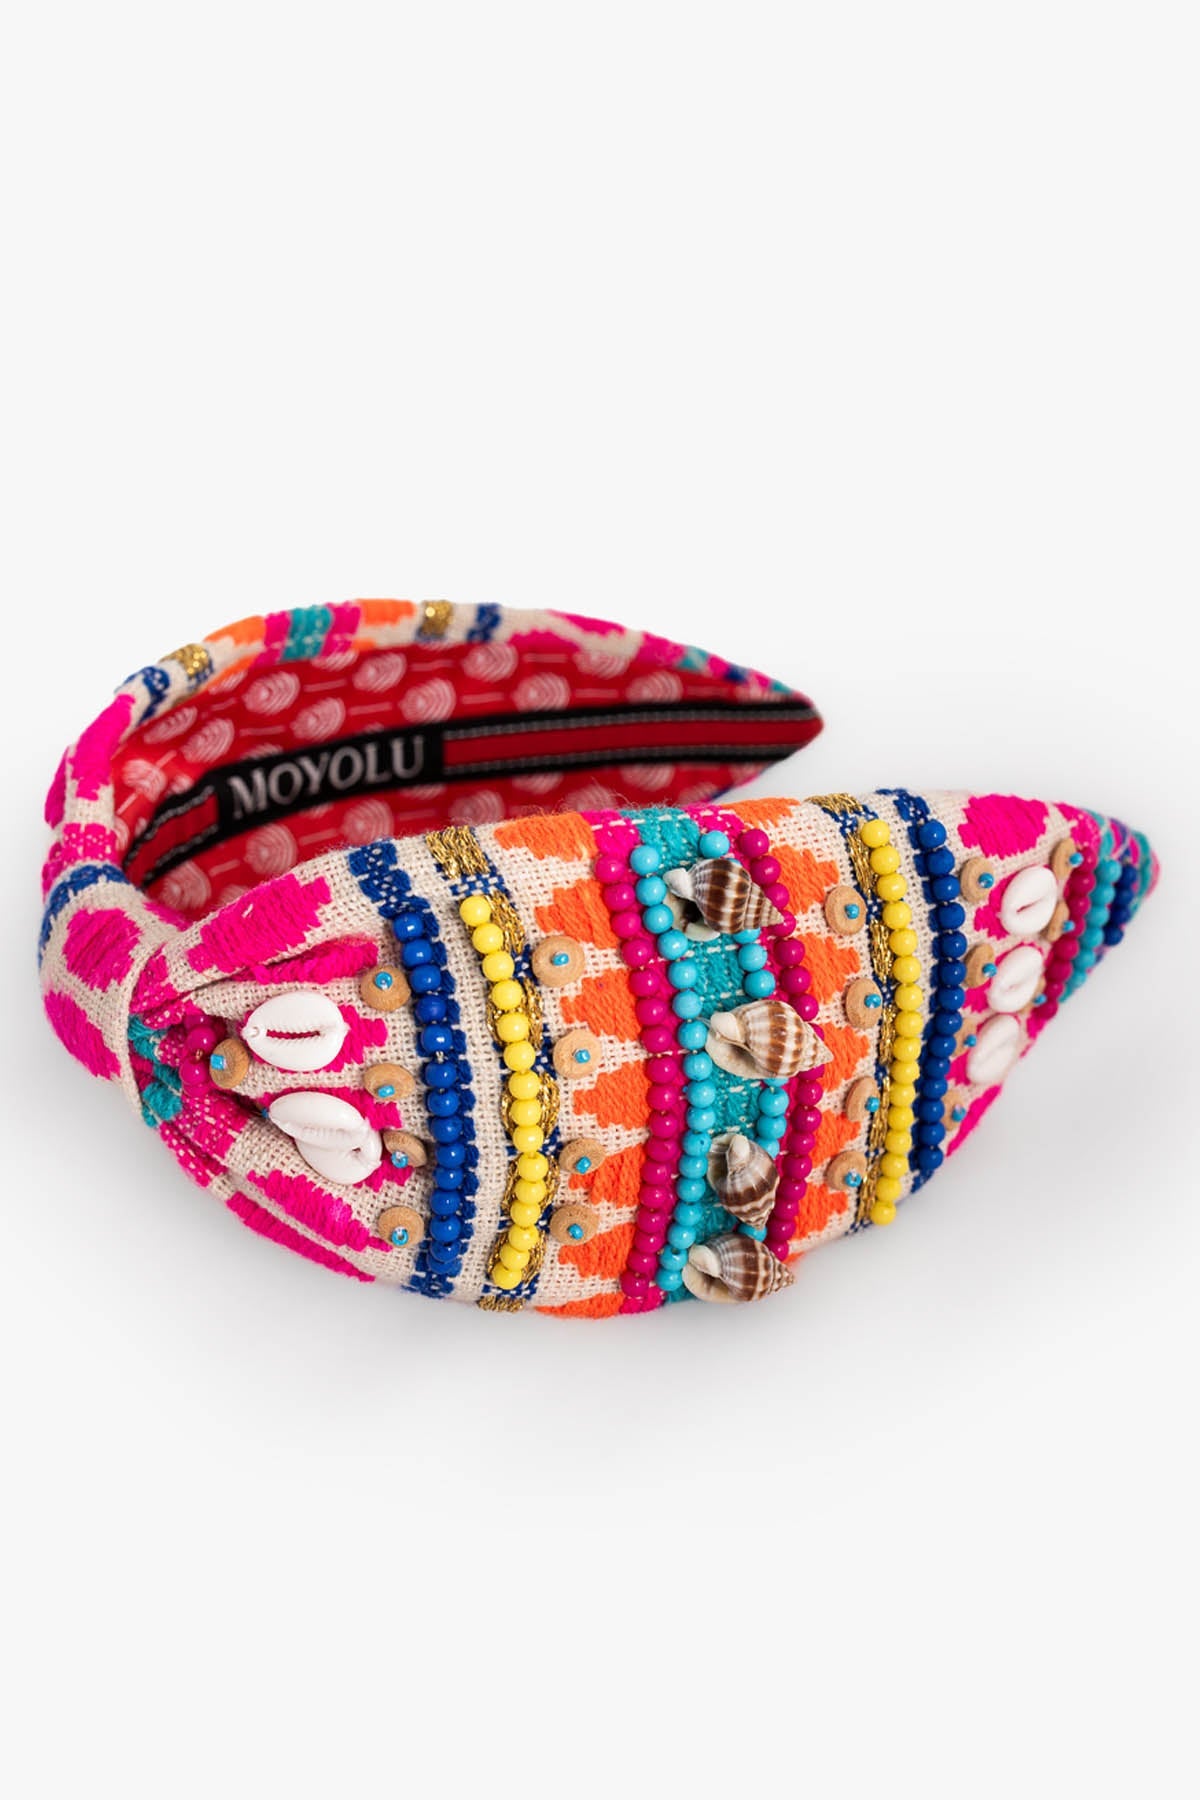 Moyolu Multicolor Embellished Headband Accessories online at ScrollnShops